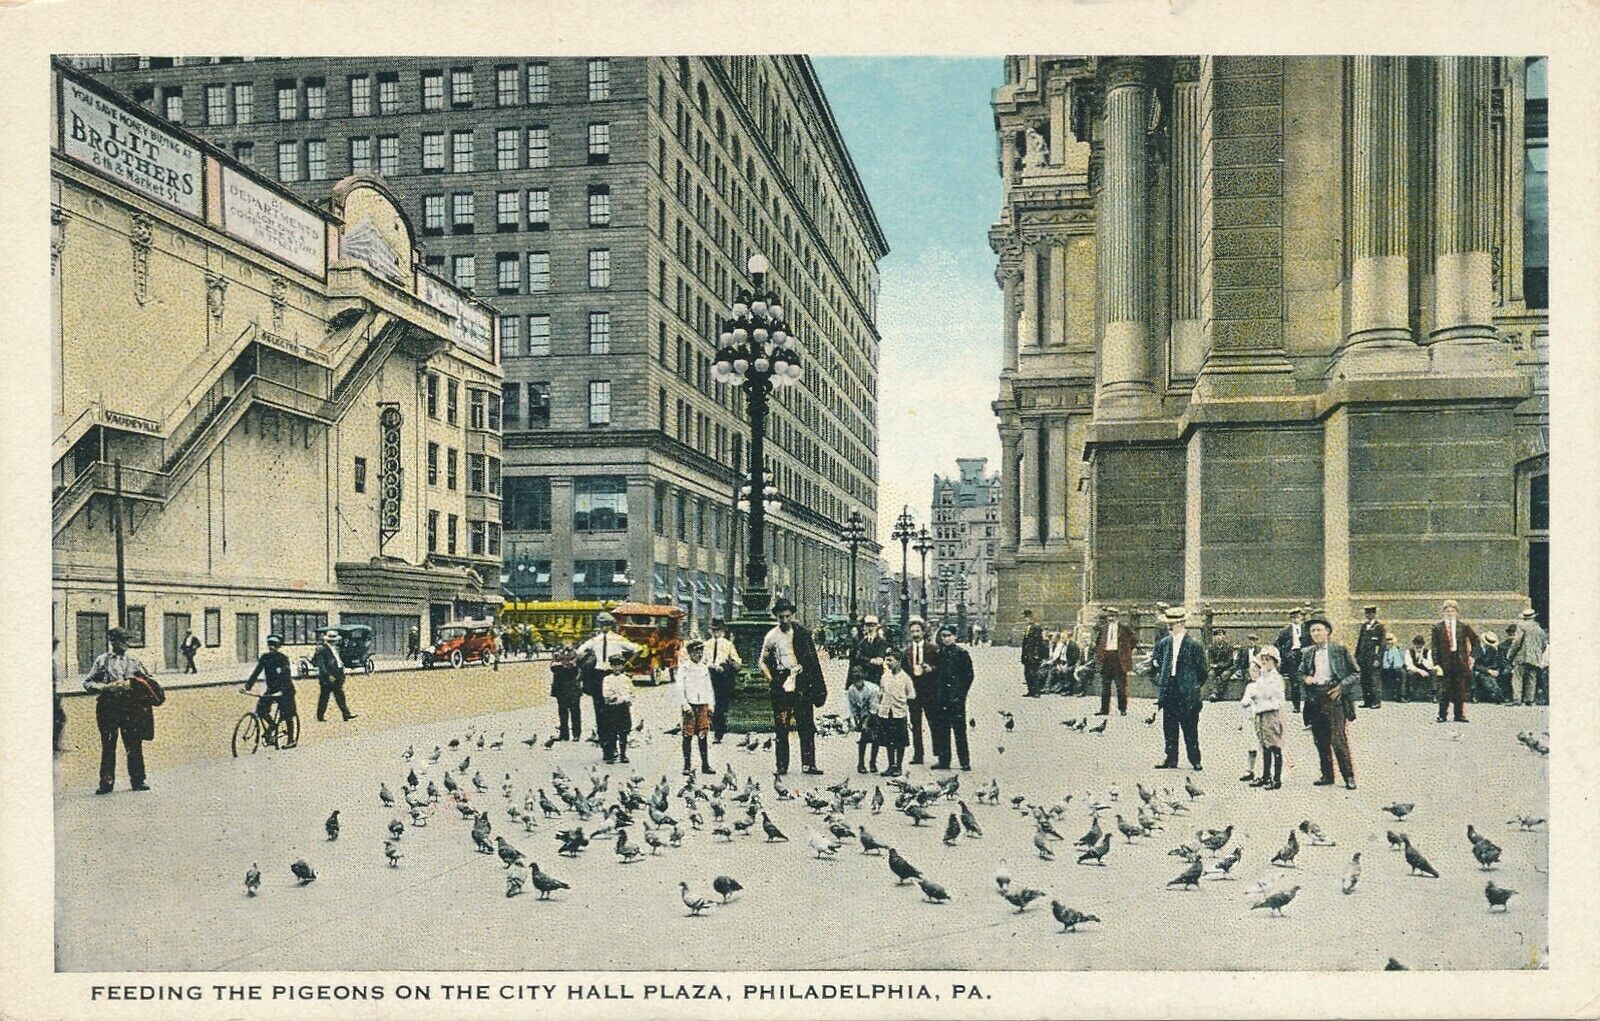 PHILADELPHIA PA – Feeding the Pigeons On the City Hall Plaza